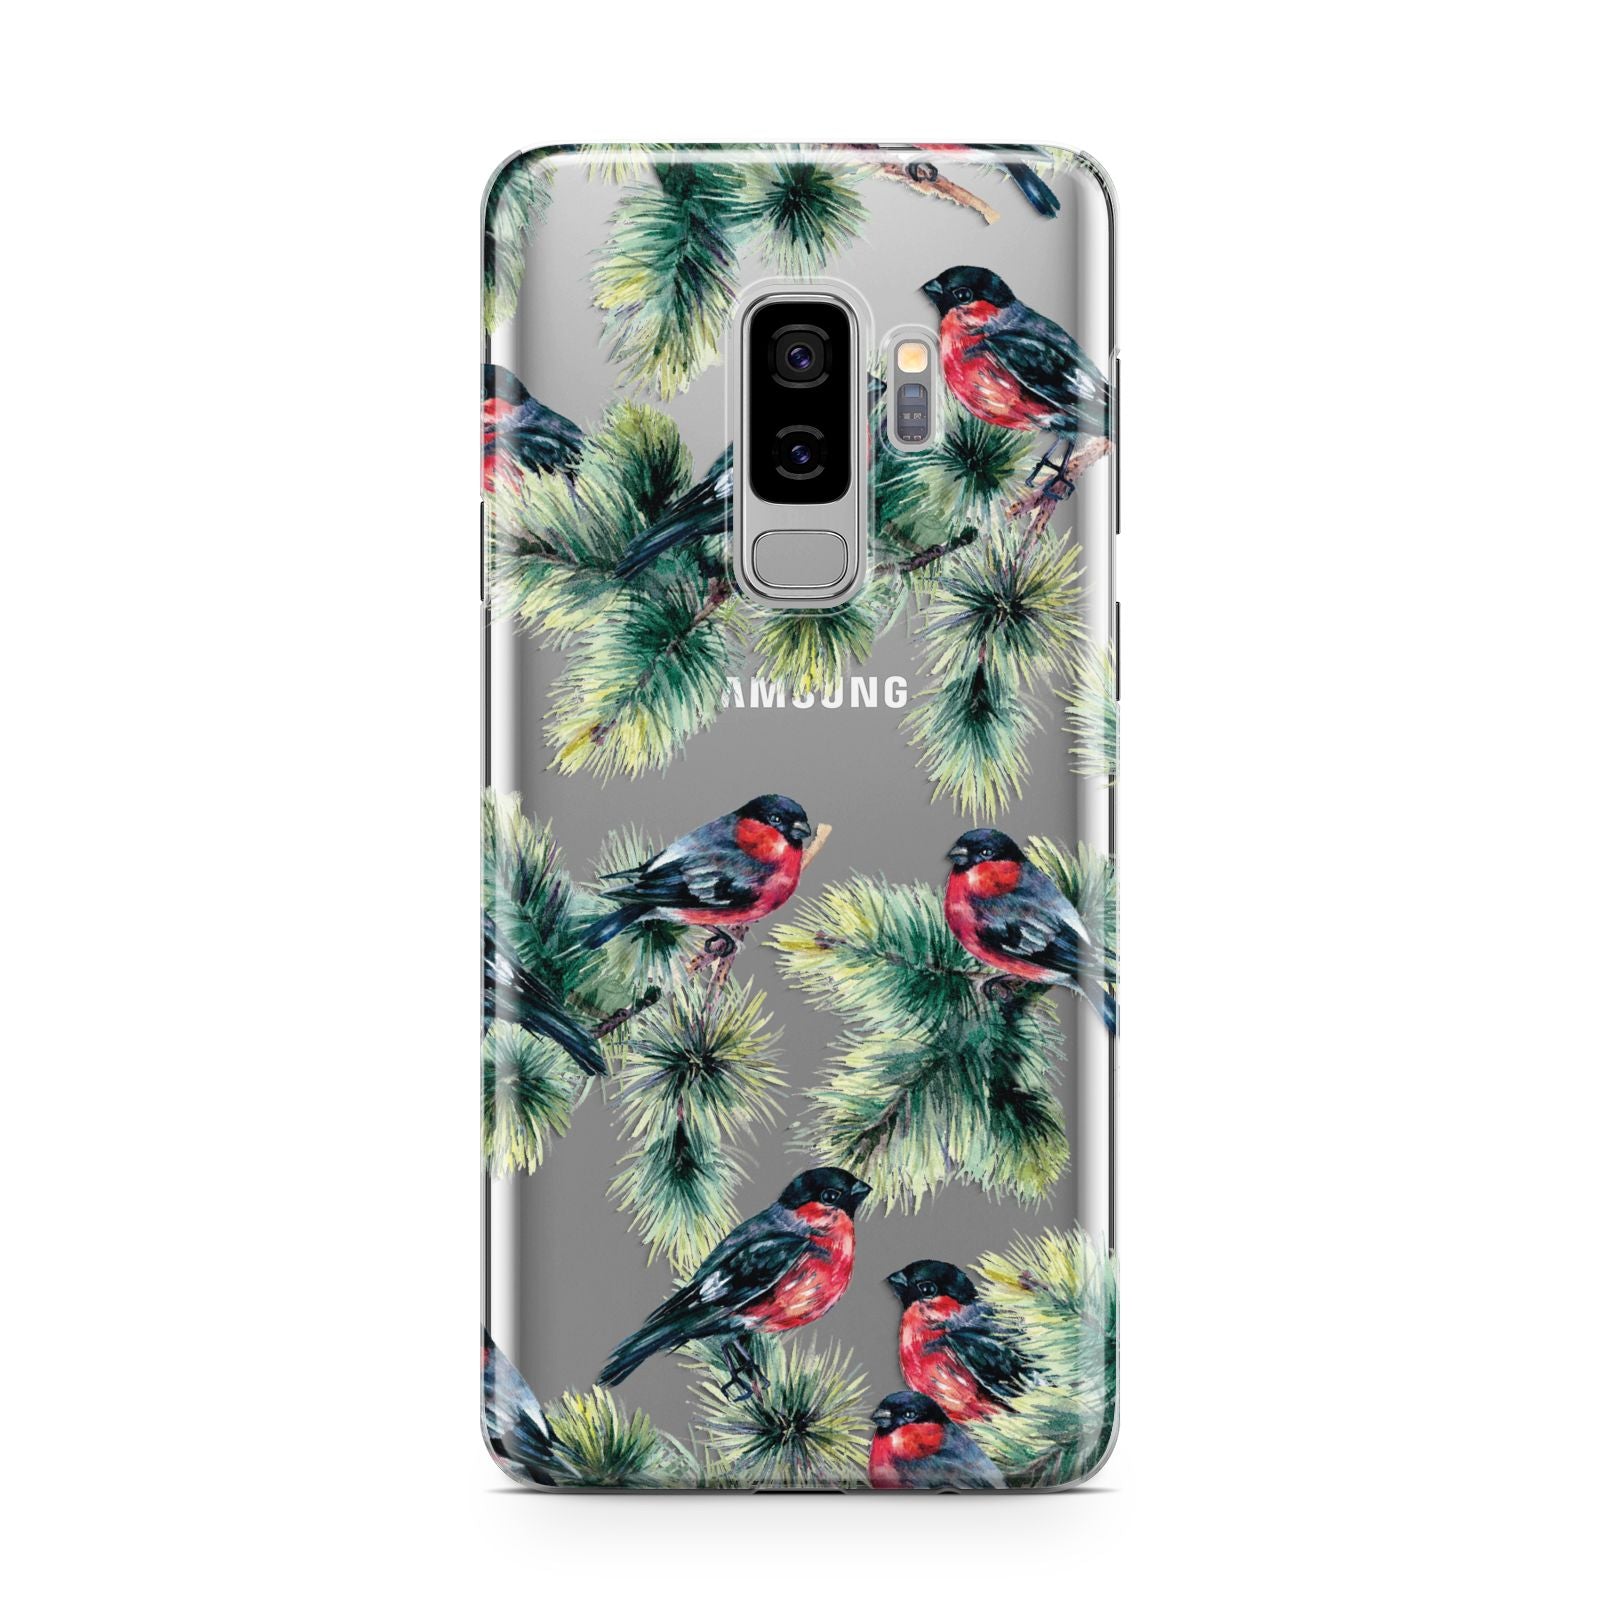 Bullfinch Pine Tree Samsung Galaxy S9 Plus Case on Silver phone